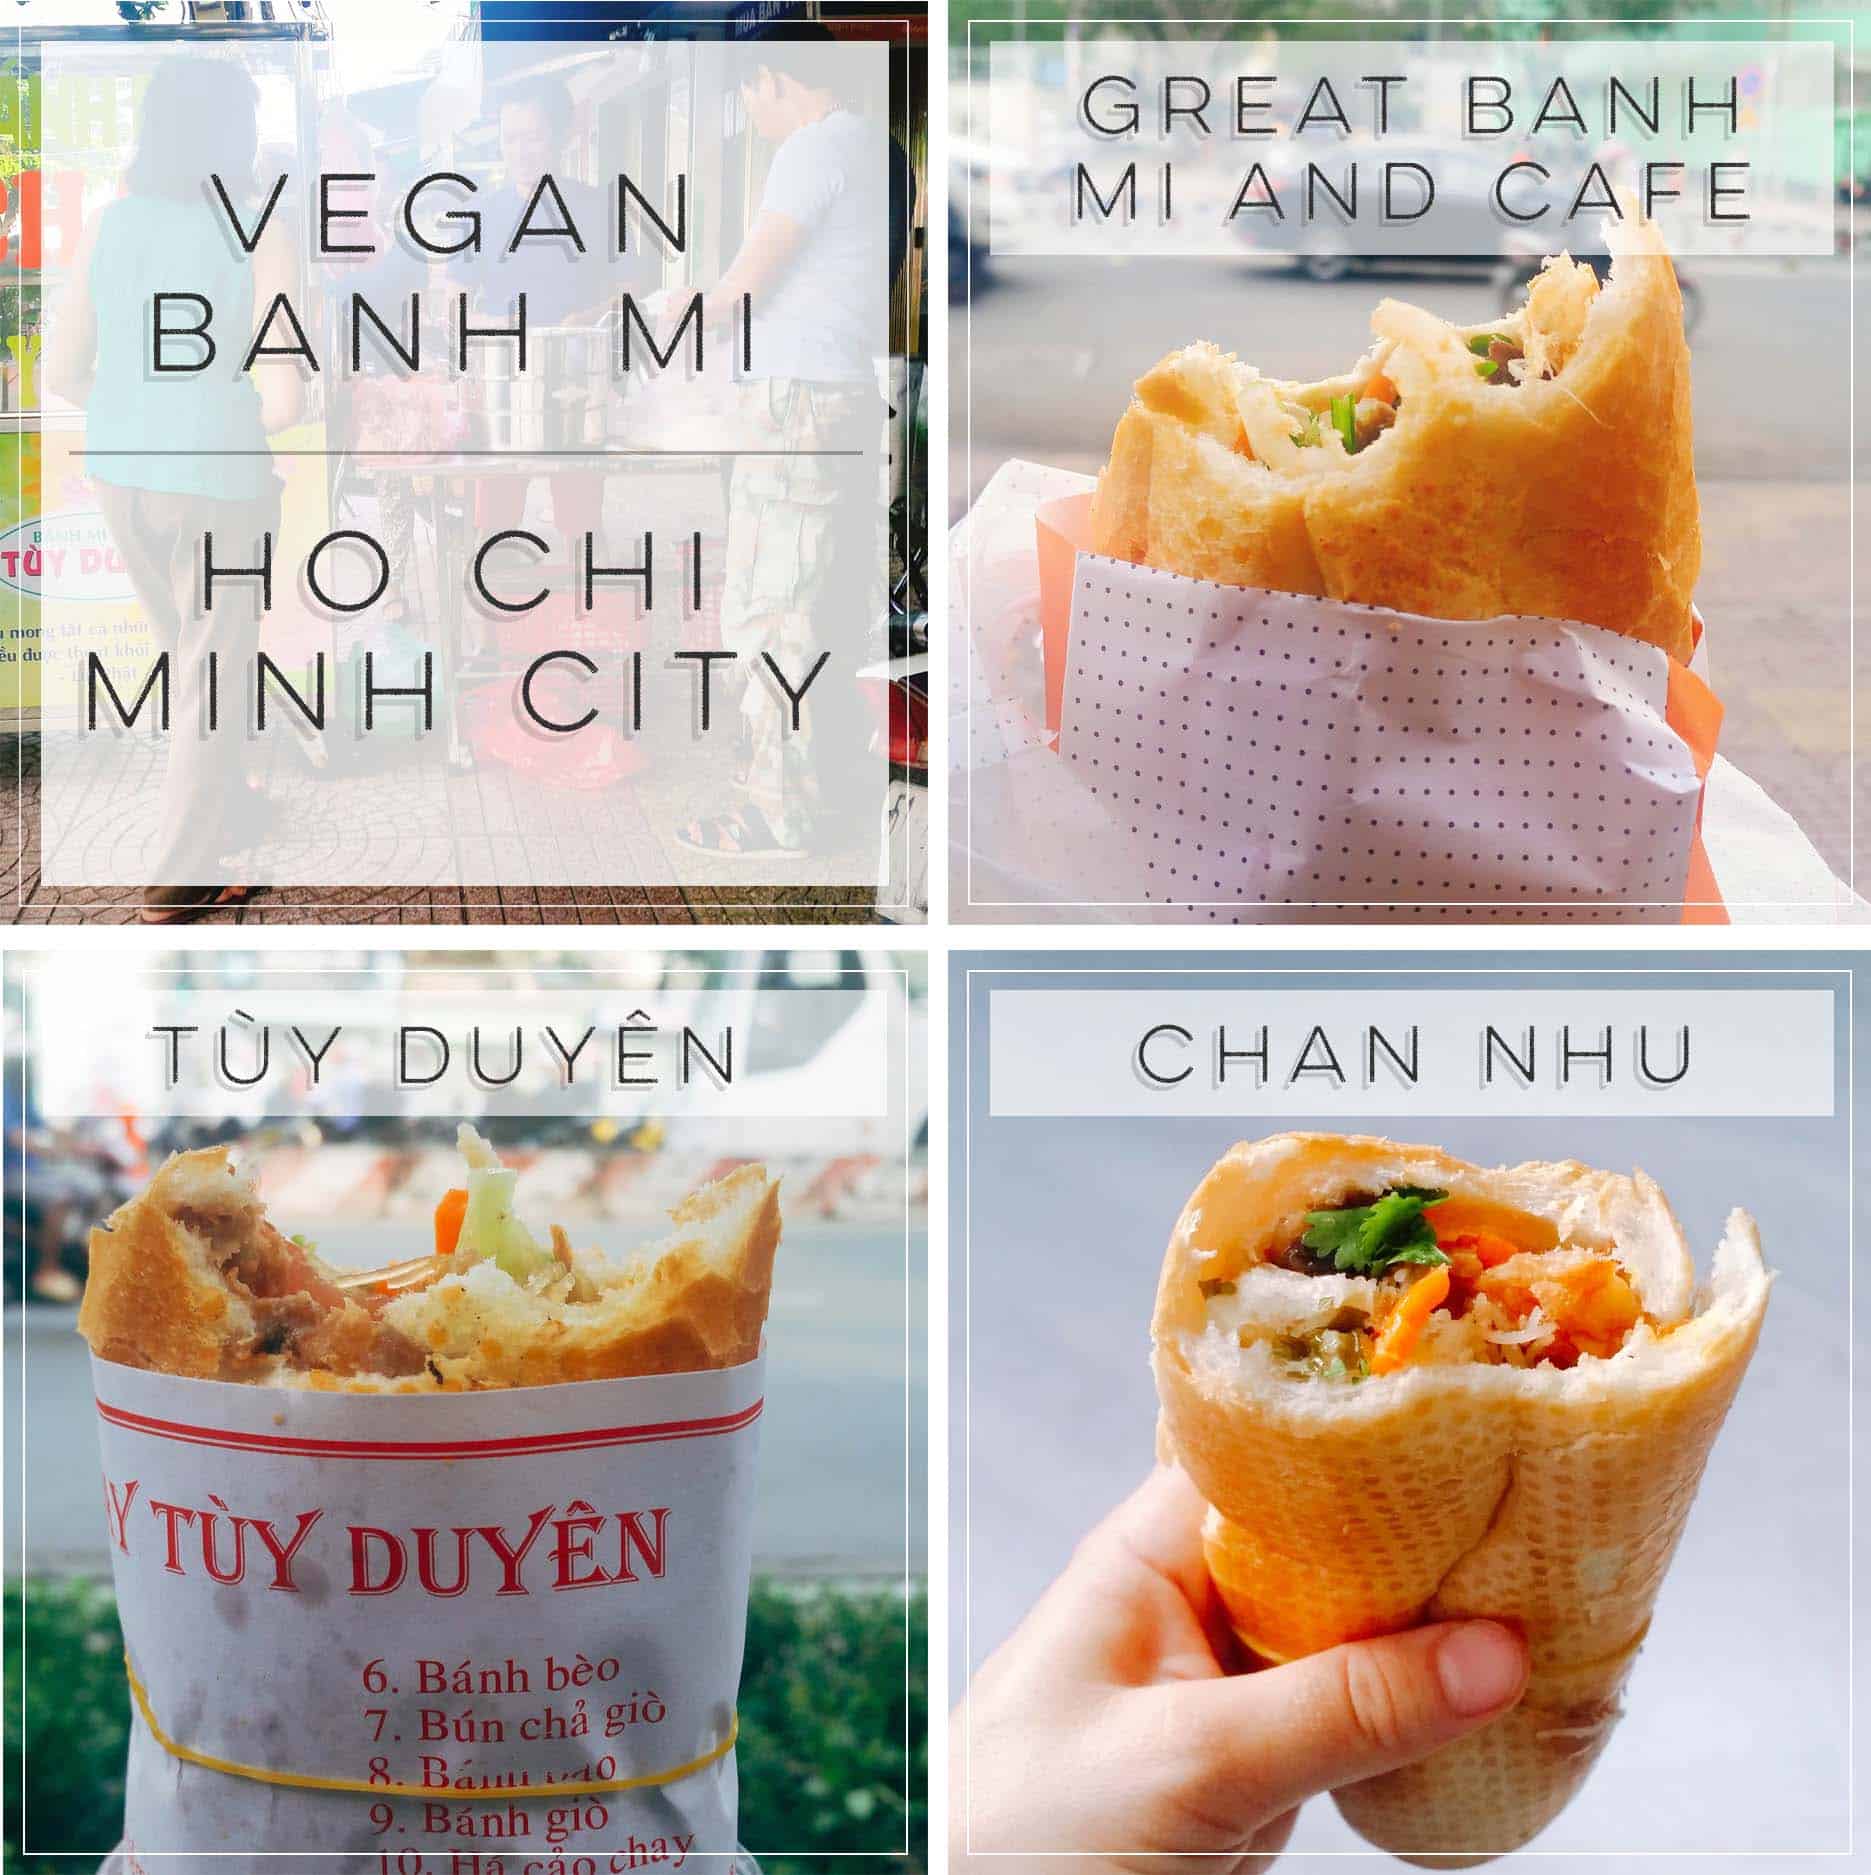 Vegan Banh Mi in Ho Chi Minh City